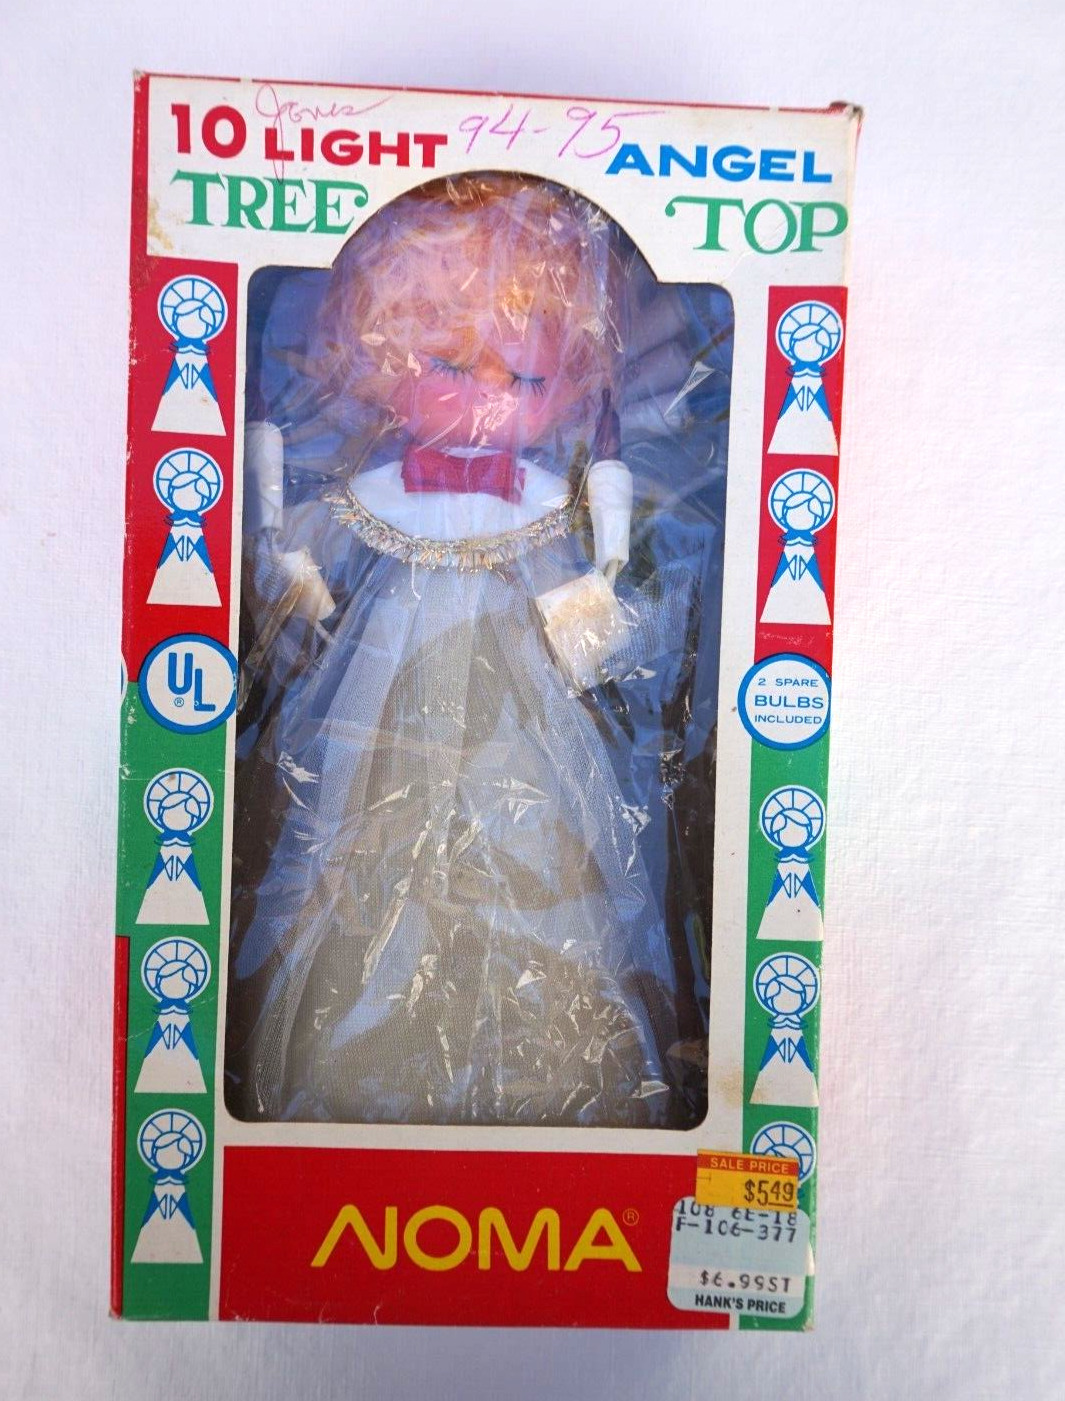 VTG NOMA Christmas Angel Tree Topper Top 10 Light Lite Lighted w/ Box TESTED